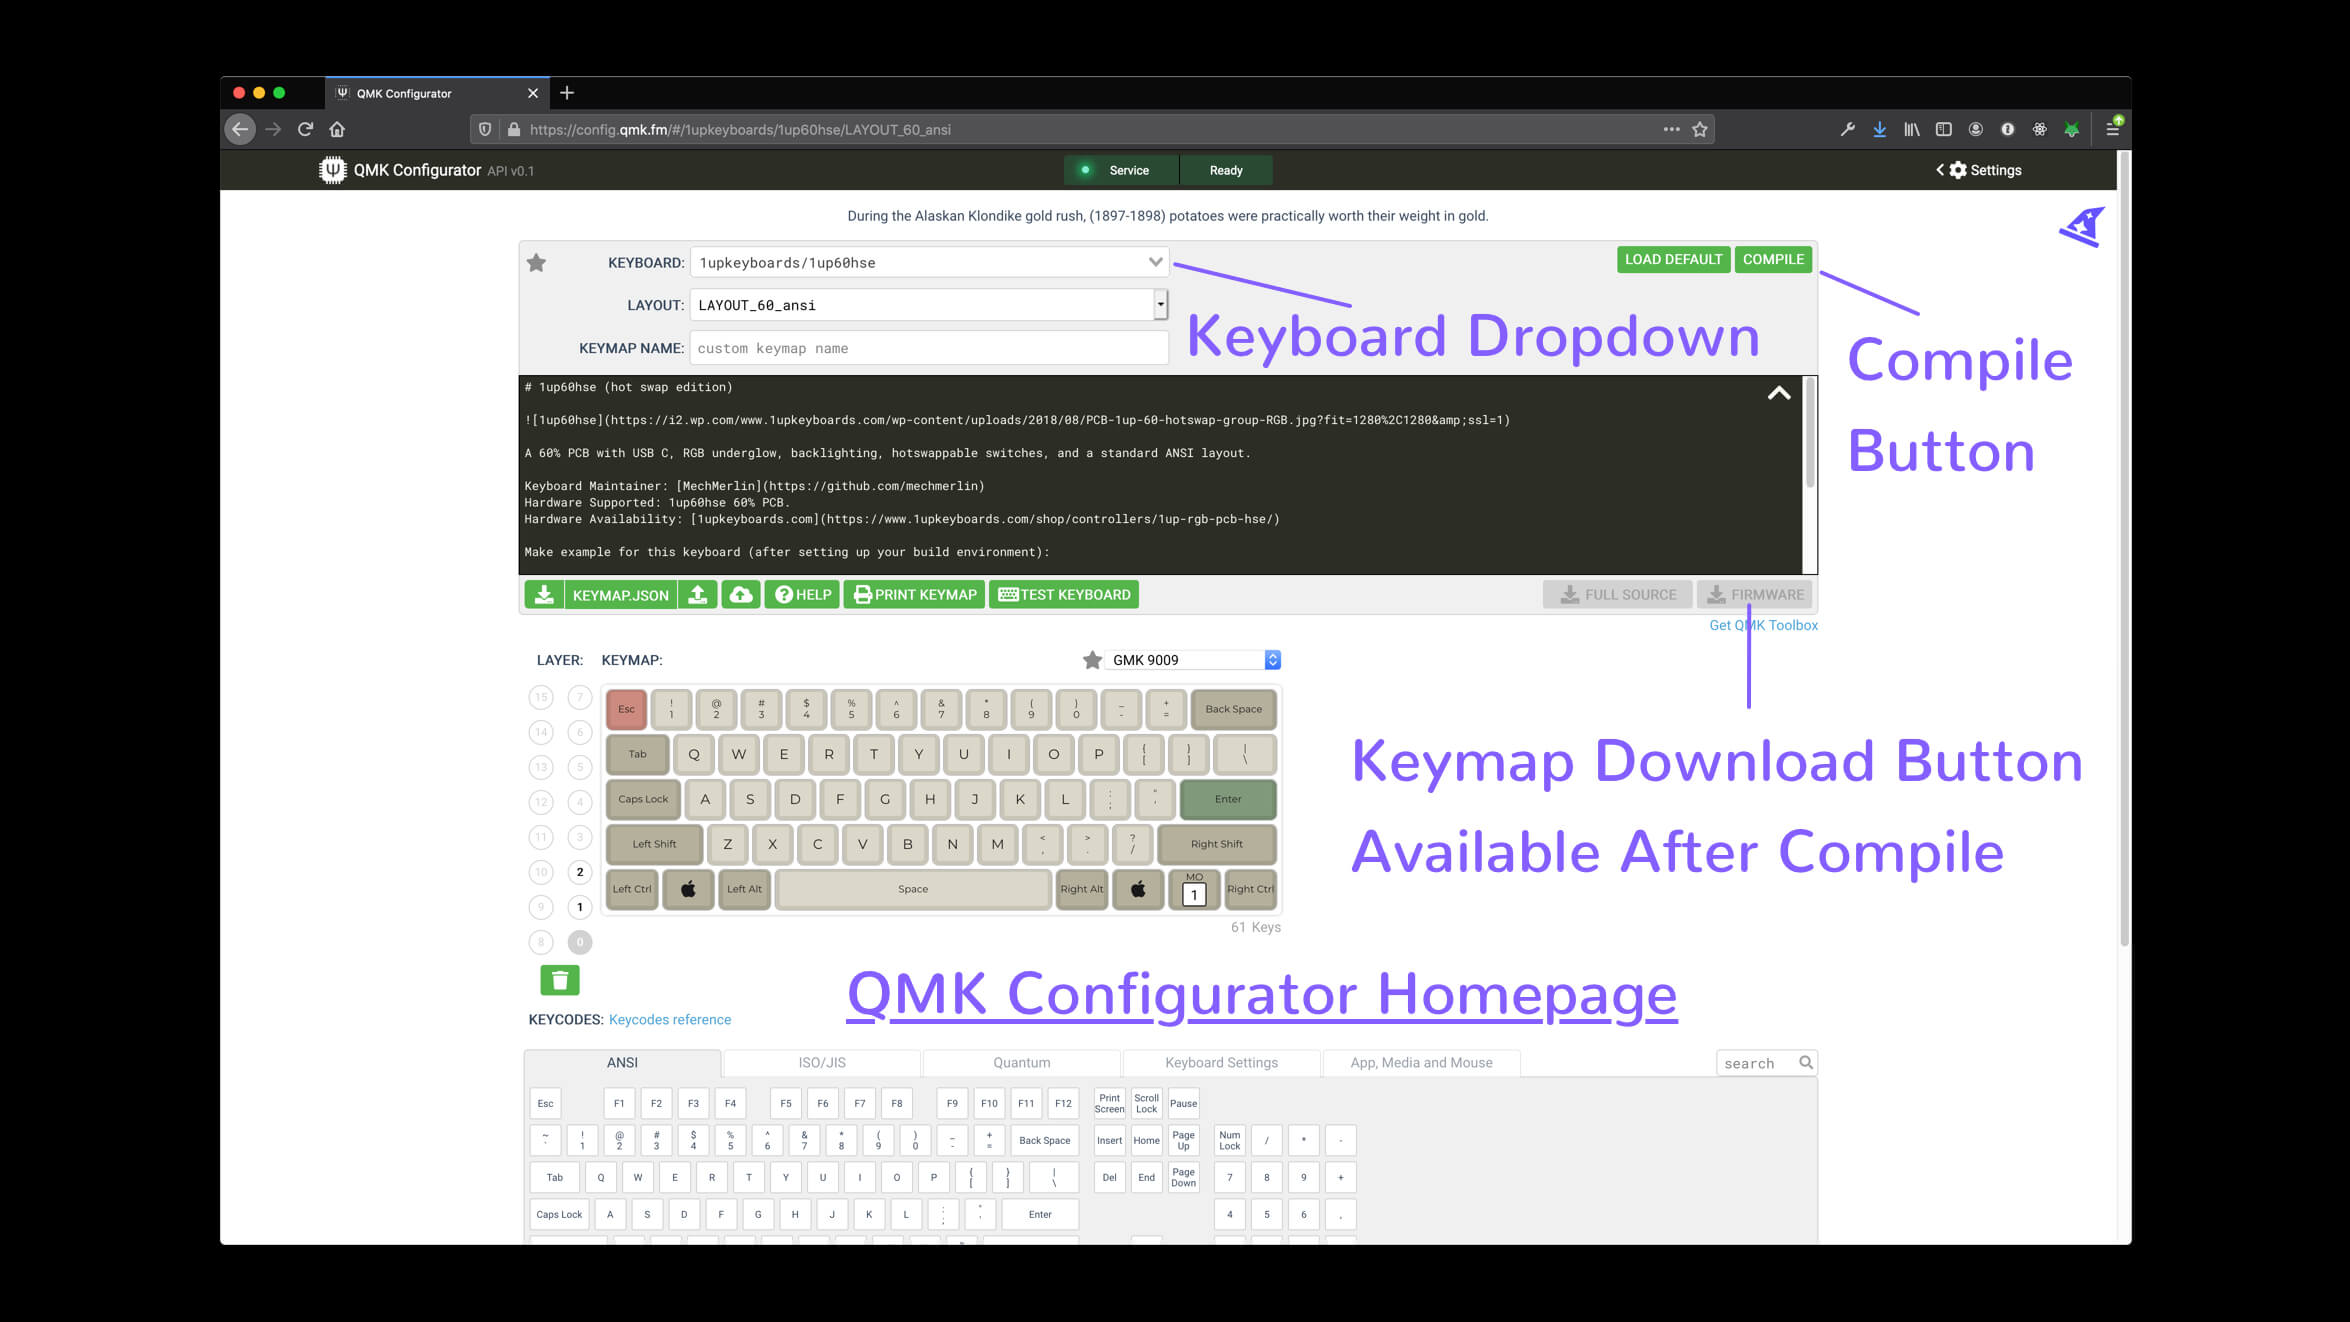 qmk configurator homepage